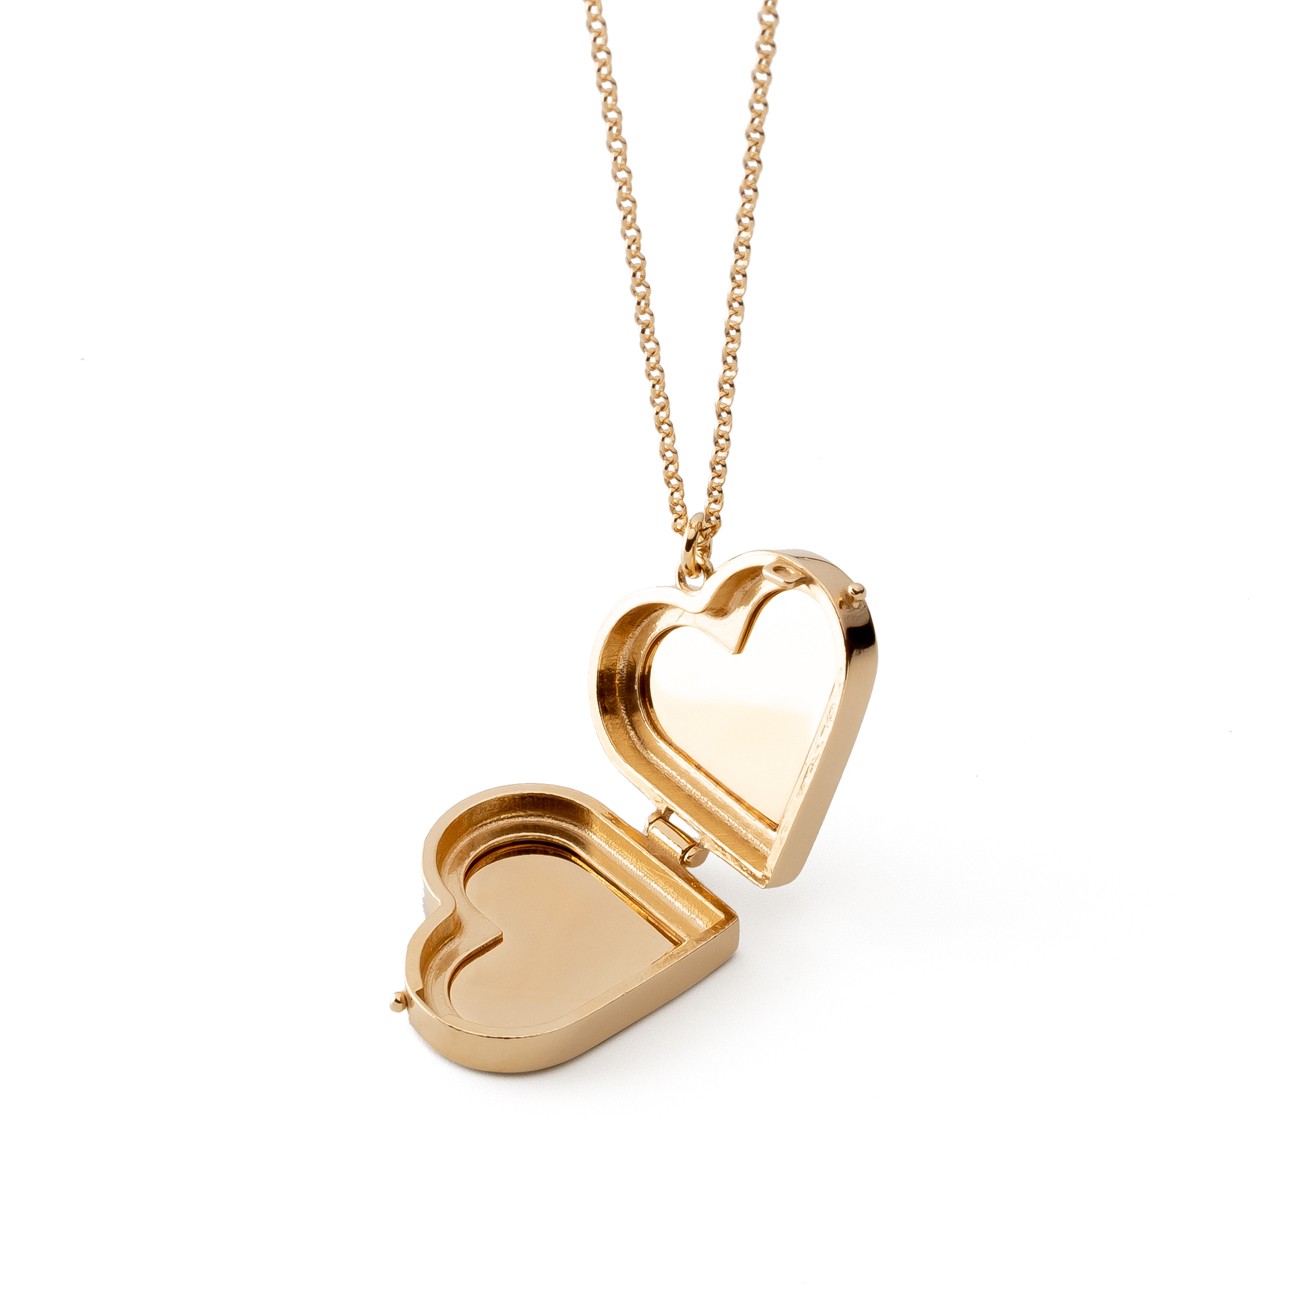 Silver heart locket pendant necklace, sterling silver 925